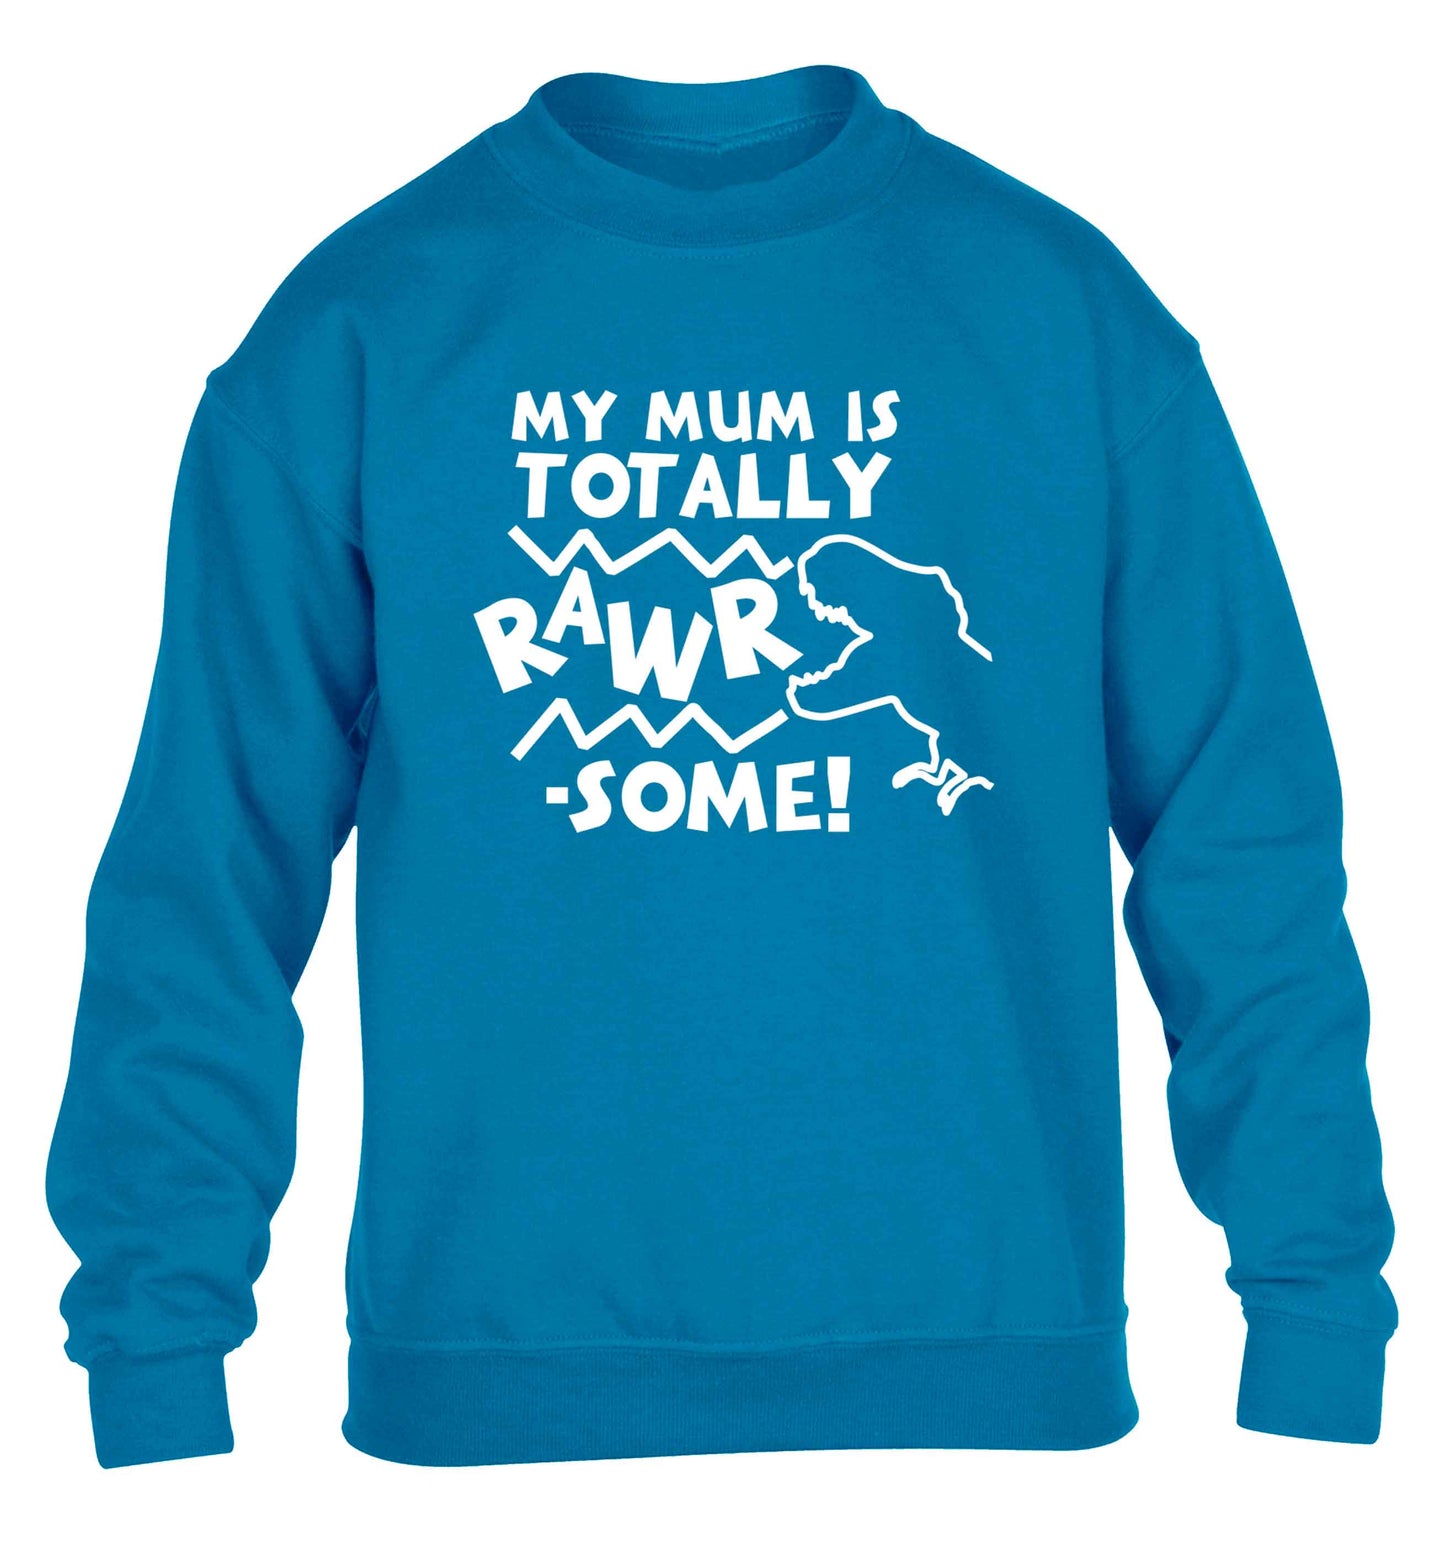 My mum is totally rawrsome children's blue sweater 12-13 Years